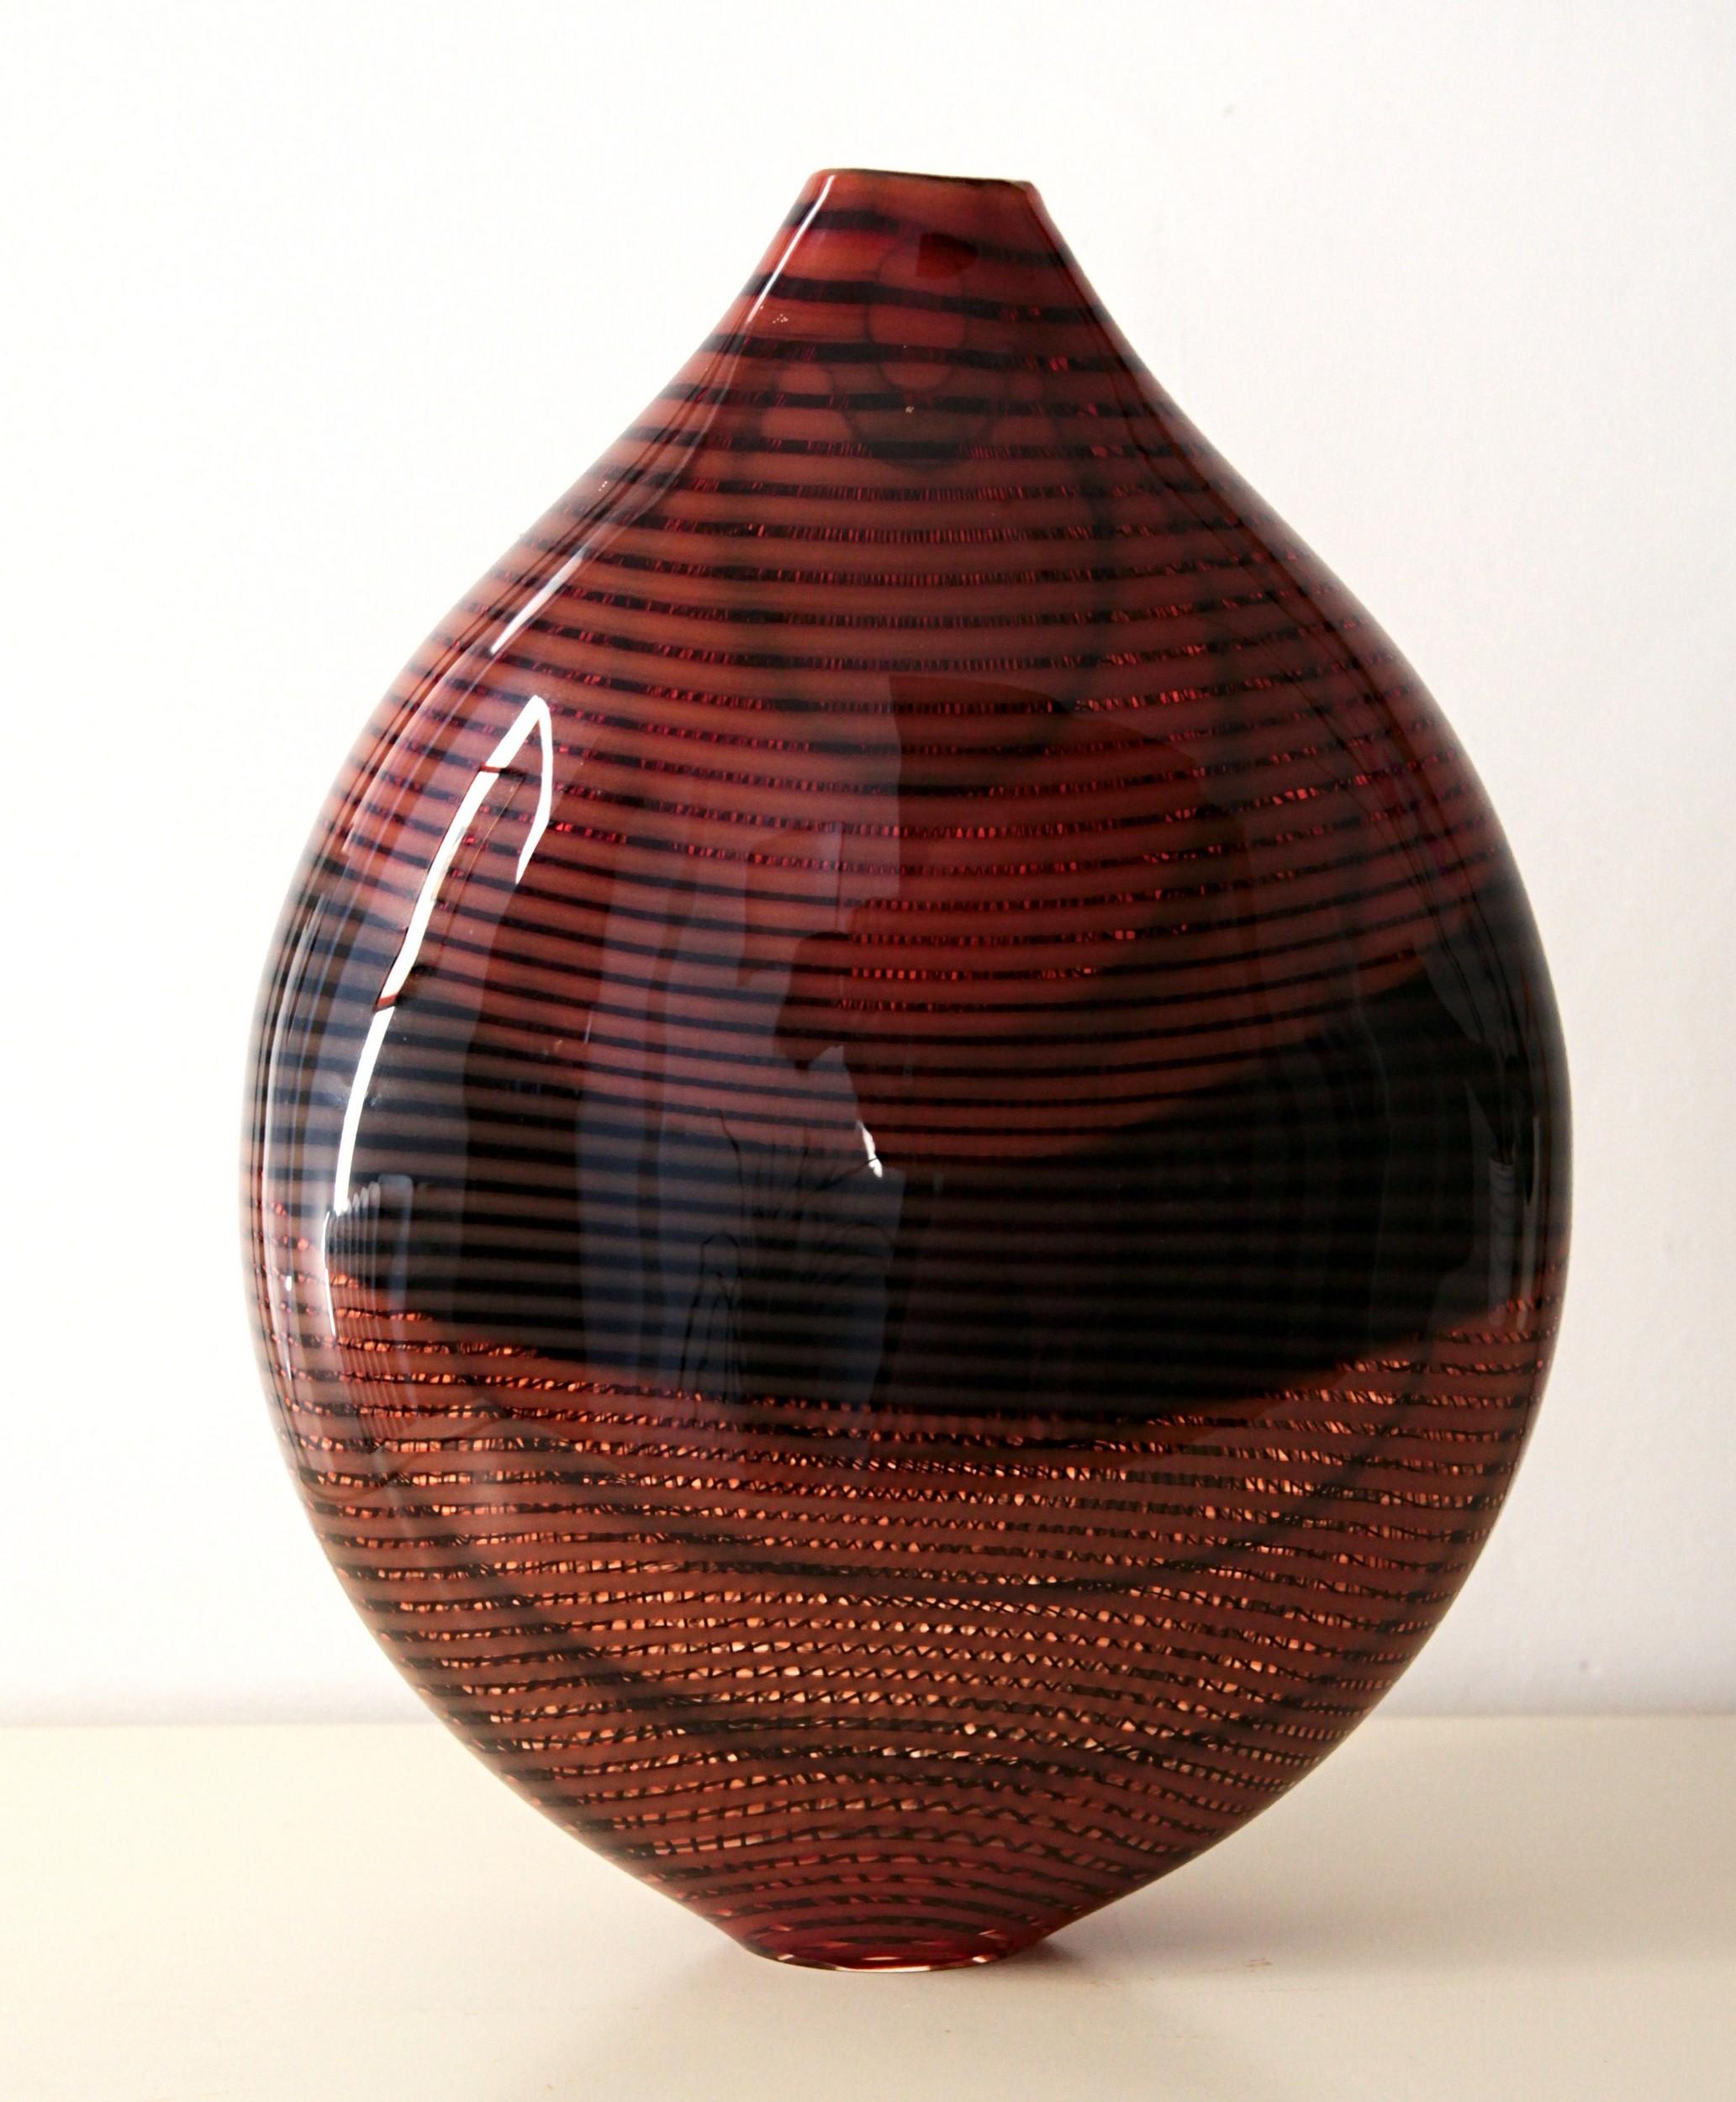 Lino Tagliapietra 2008, Burnt Orange and Black Smalto Vase, Signed 8